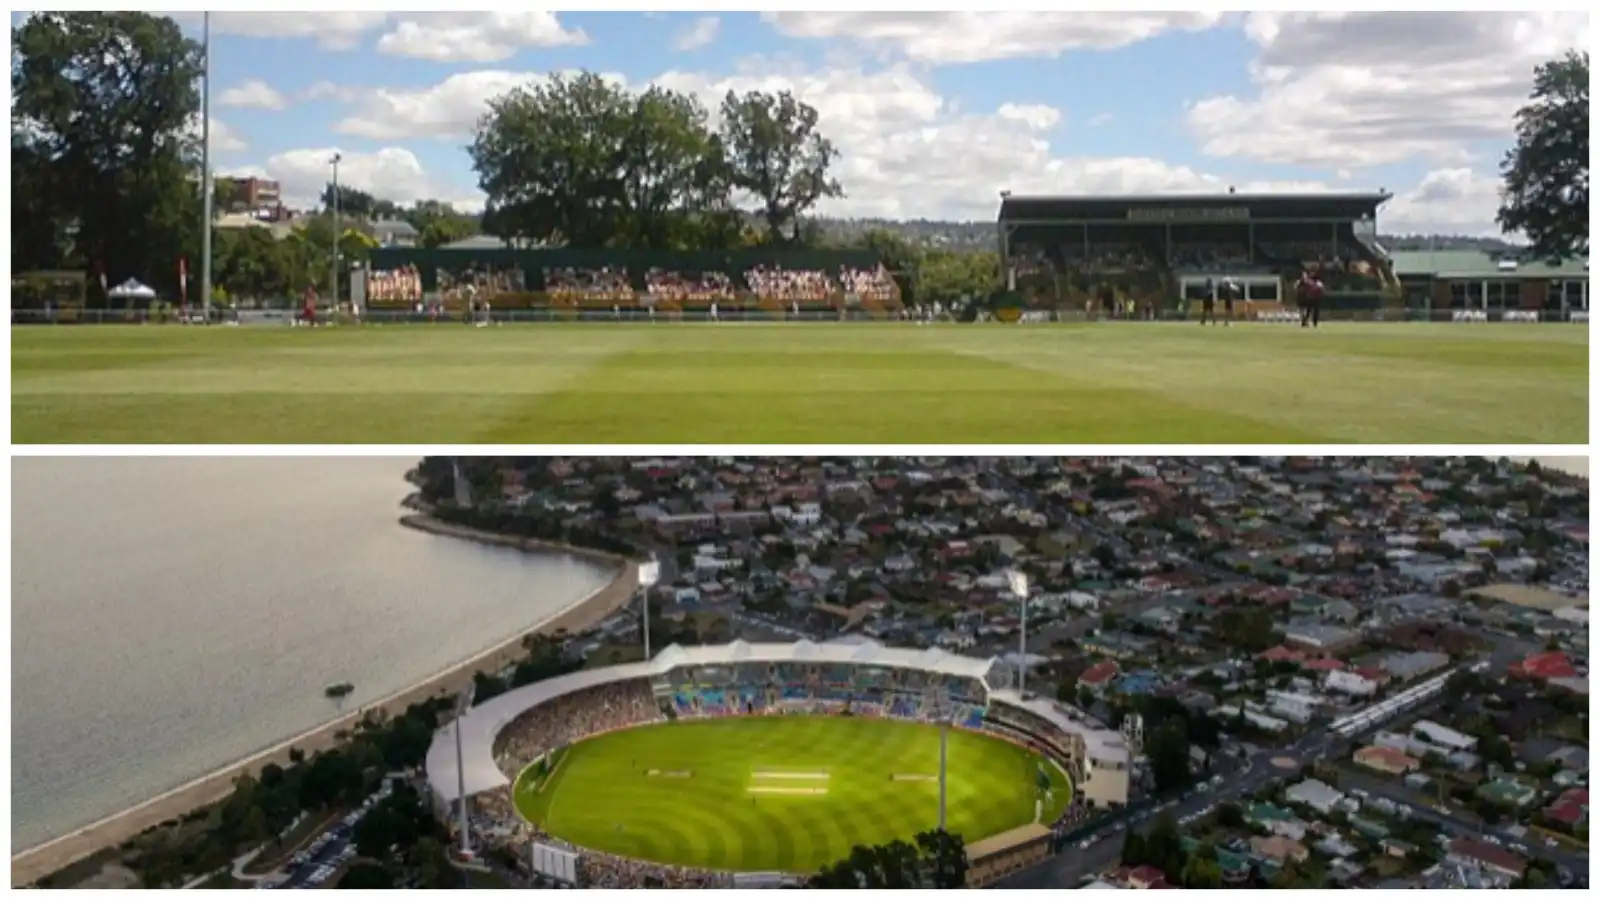 North Tasmania Cricket Association Ground (NTCA) Boundary Length And Seating Capacity